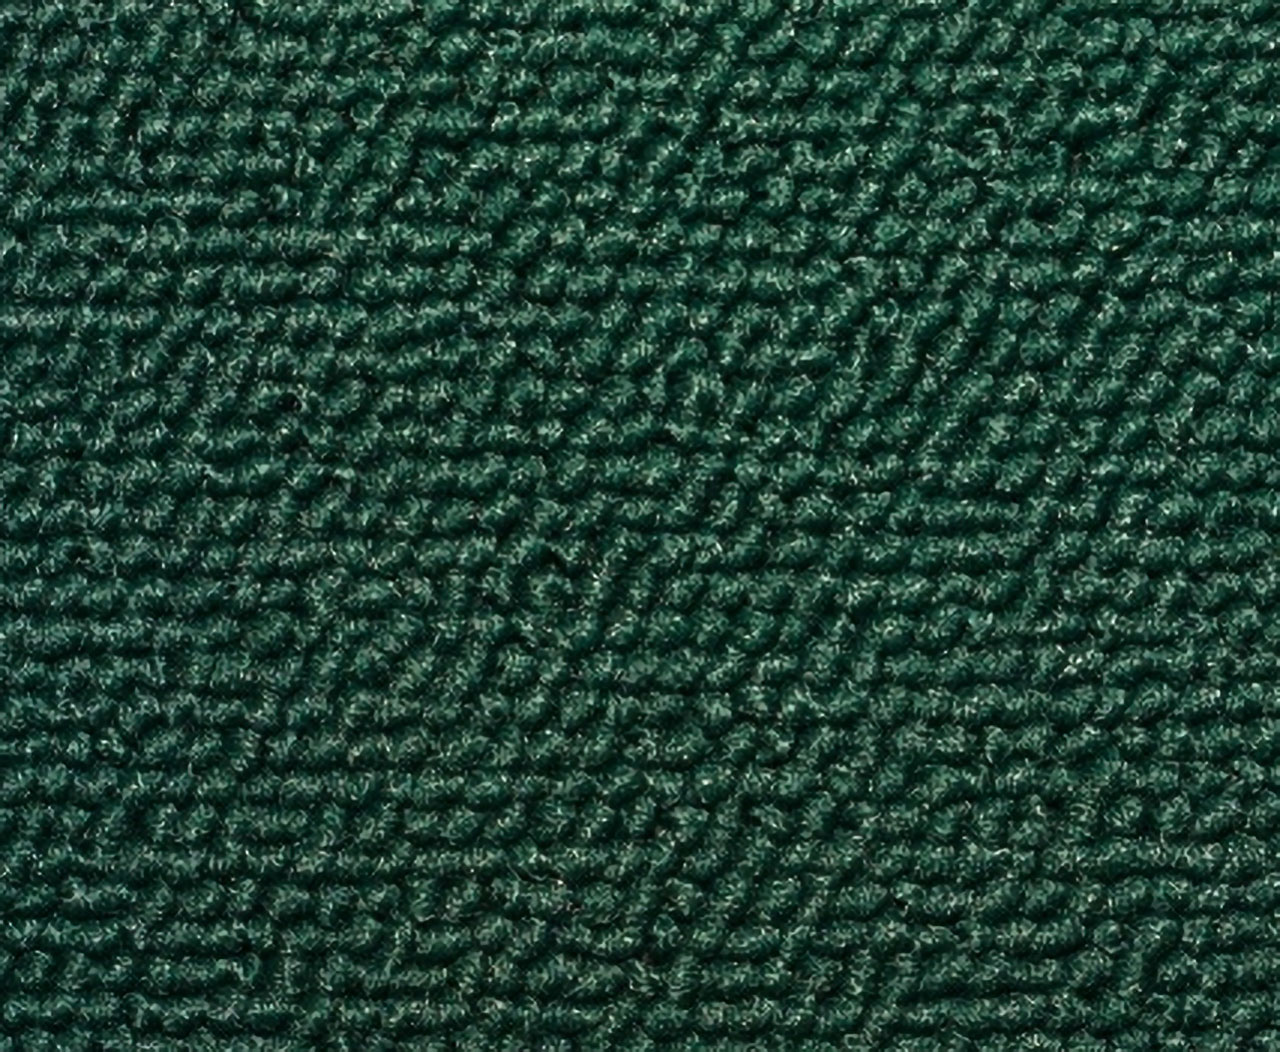 Holden Standard EJ Standard Panel Van B62 Triton Green Carpet (Image 1 of 1)